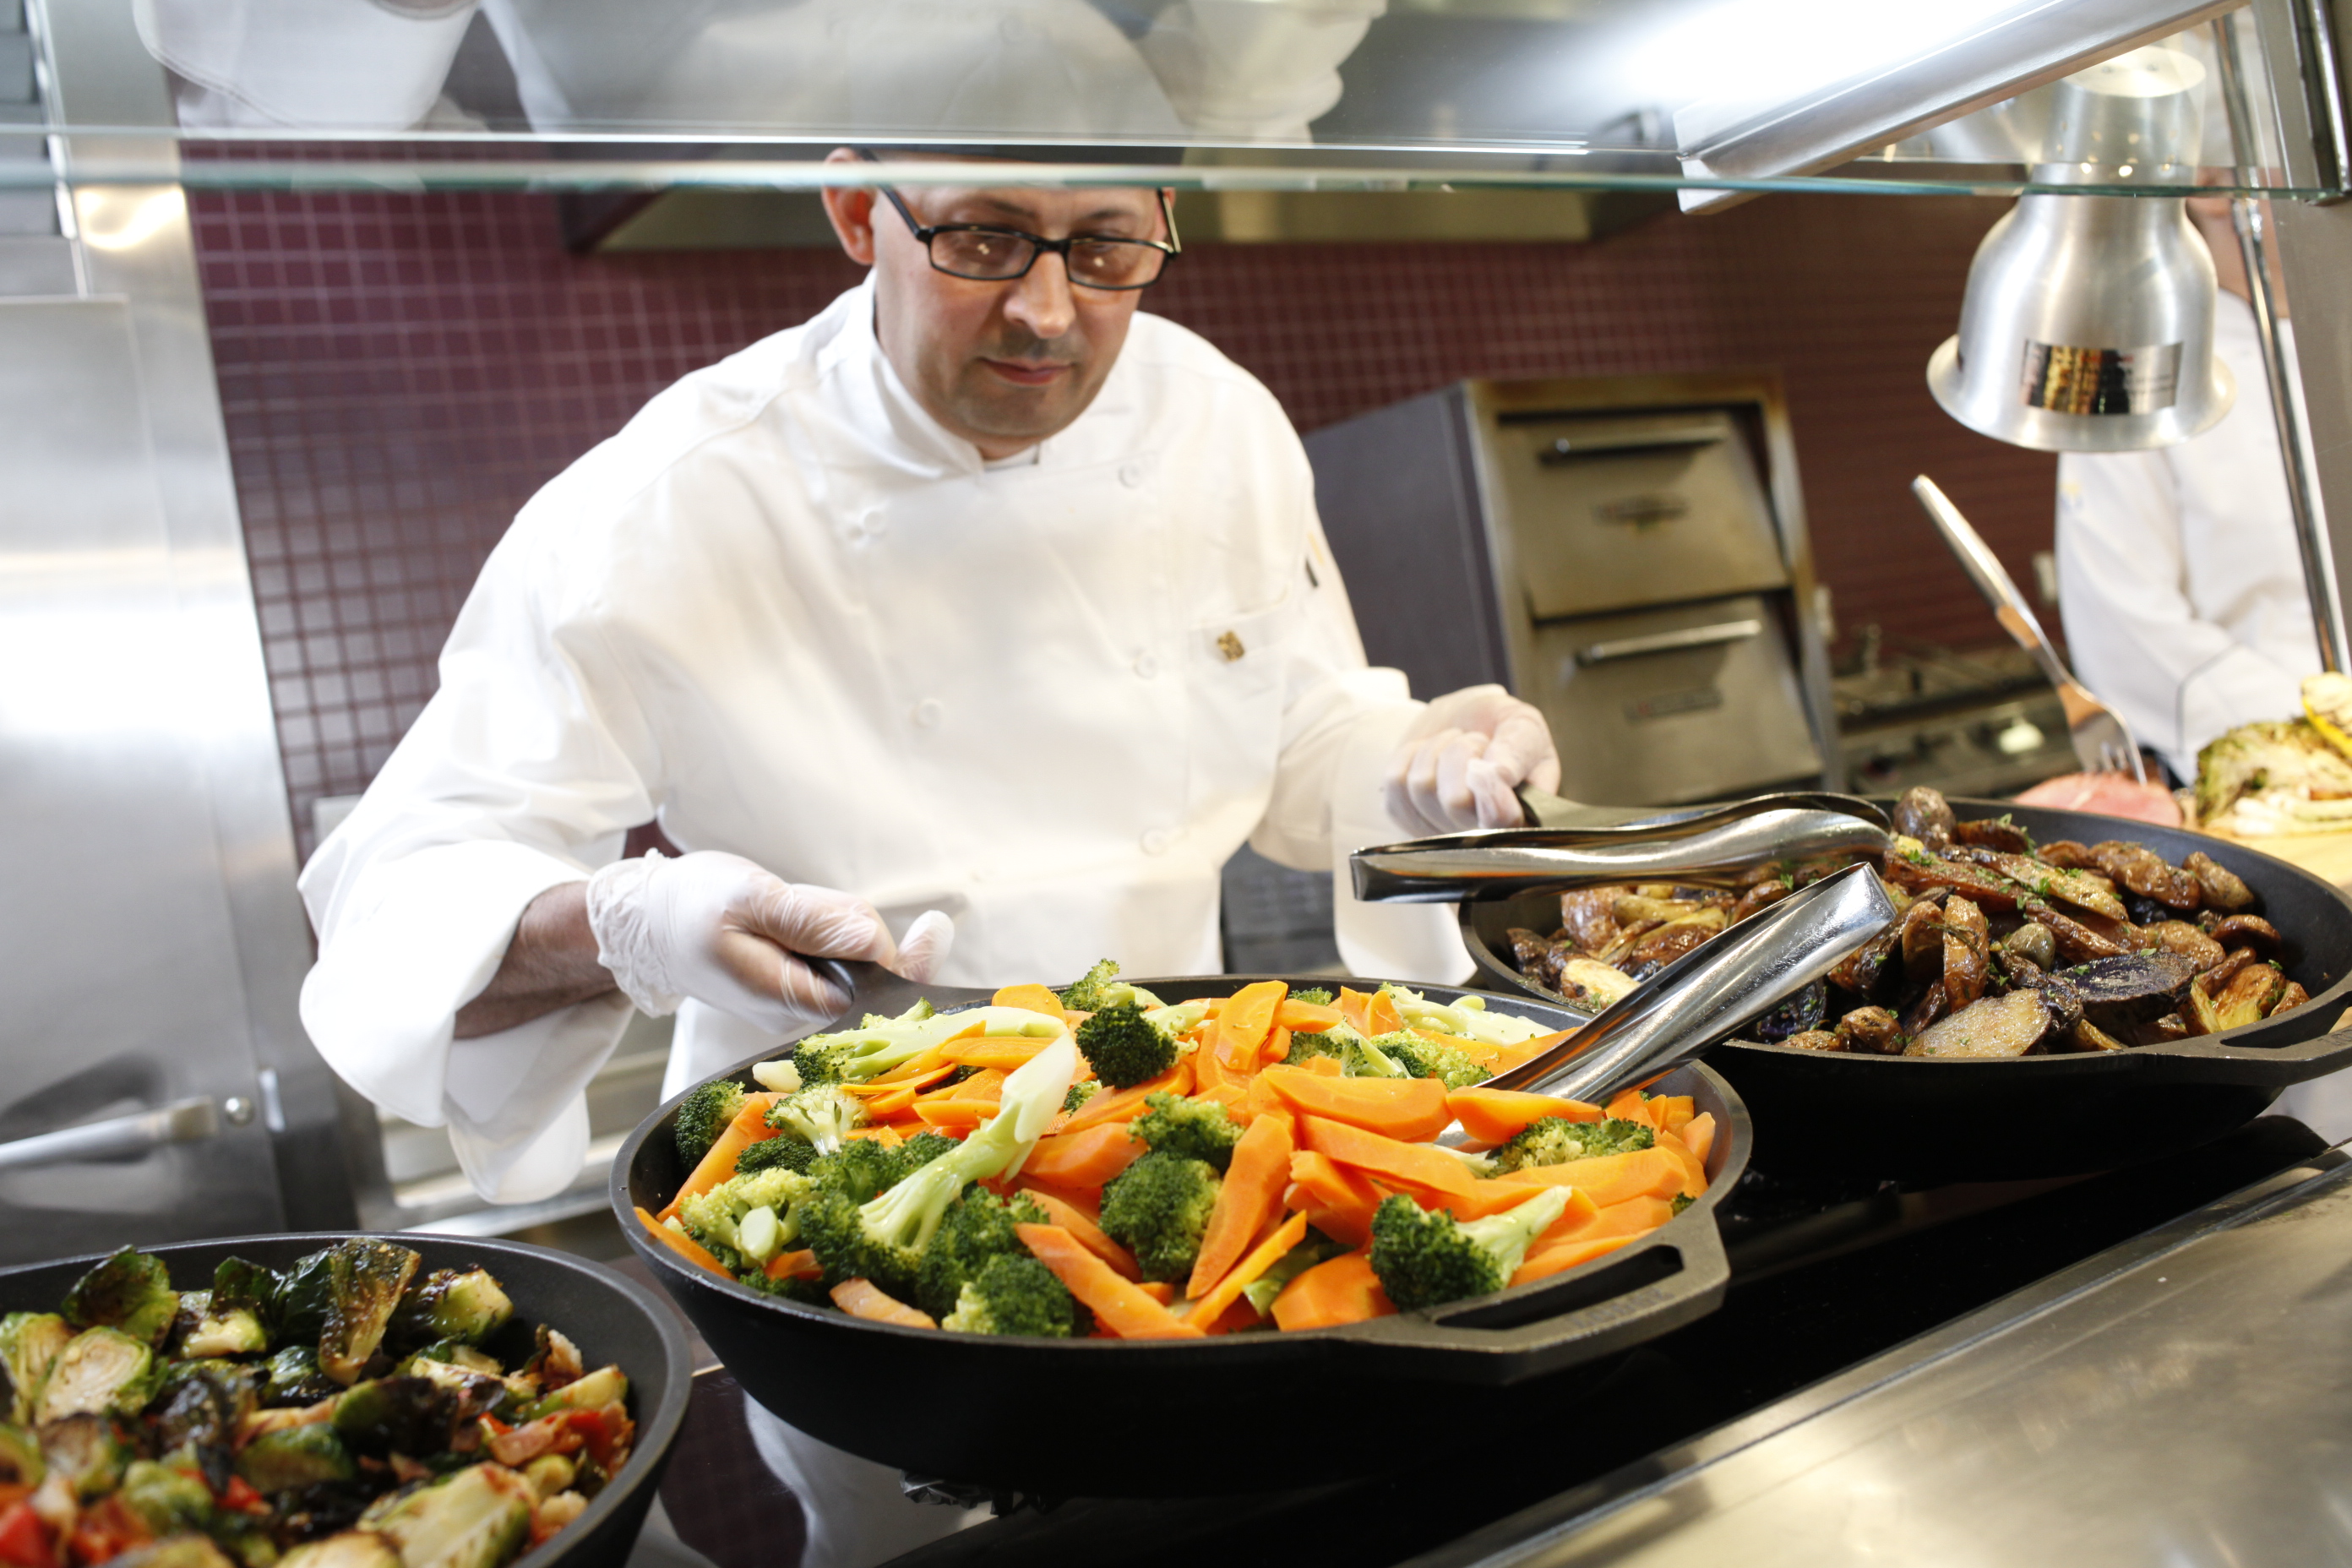 Unidine's chef prepares healthy lunch options